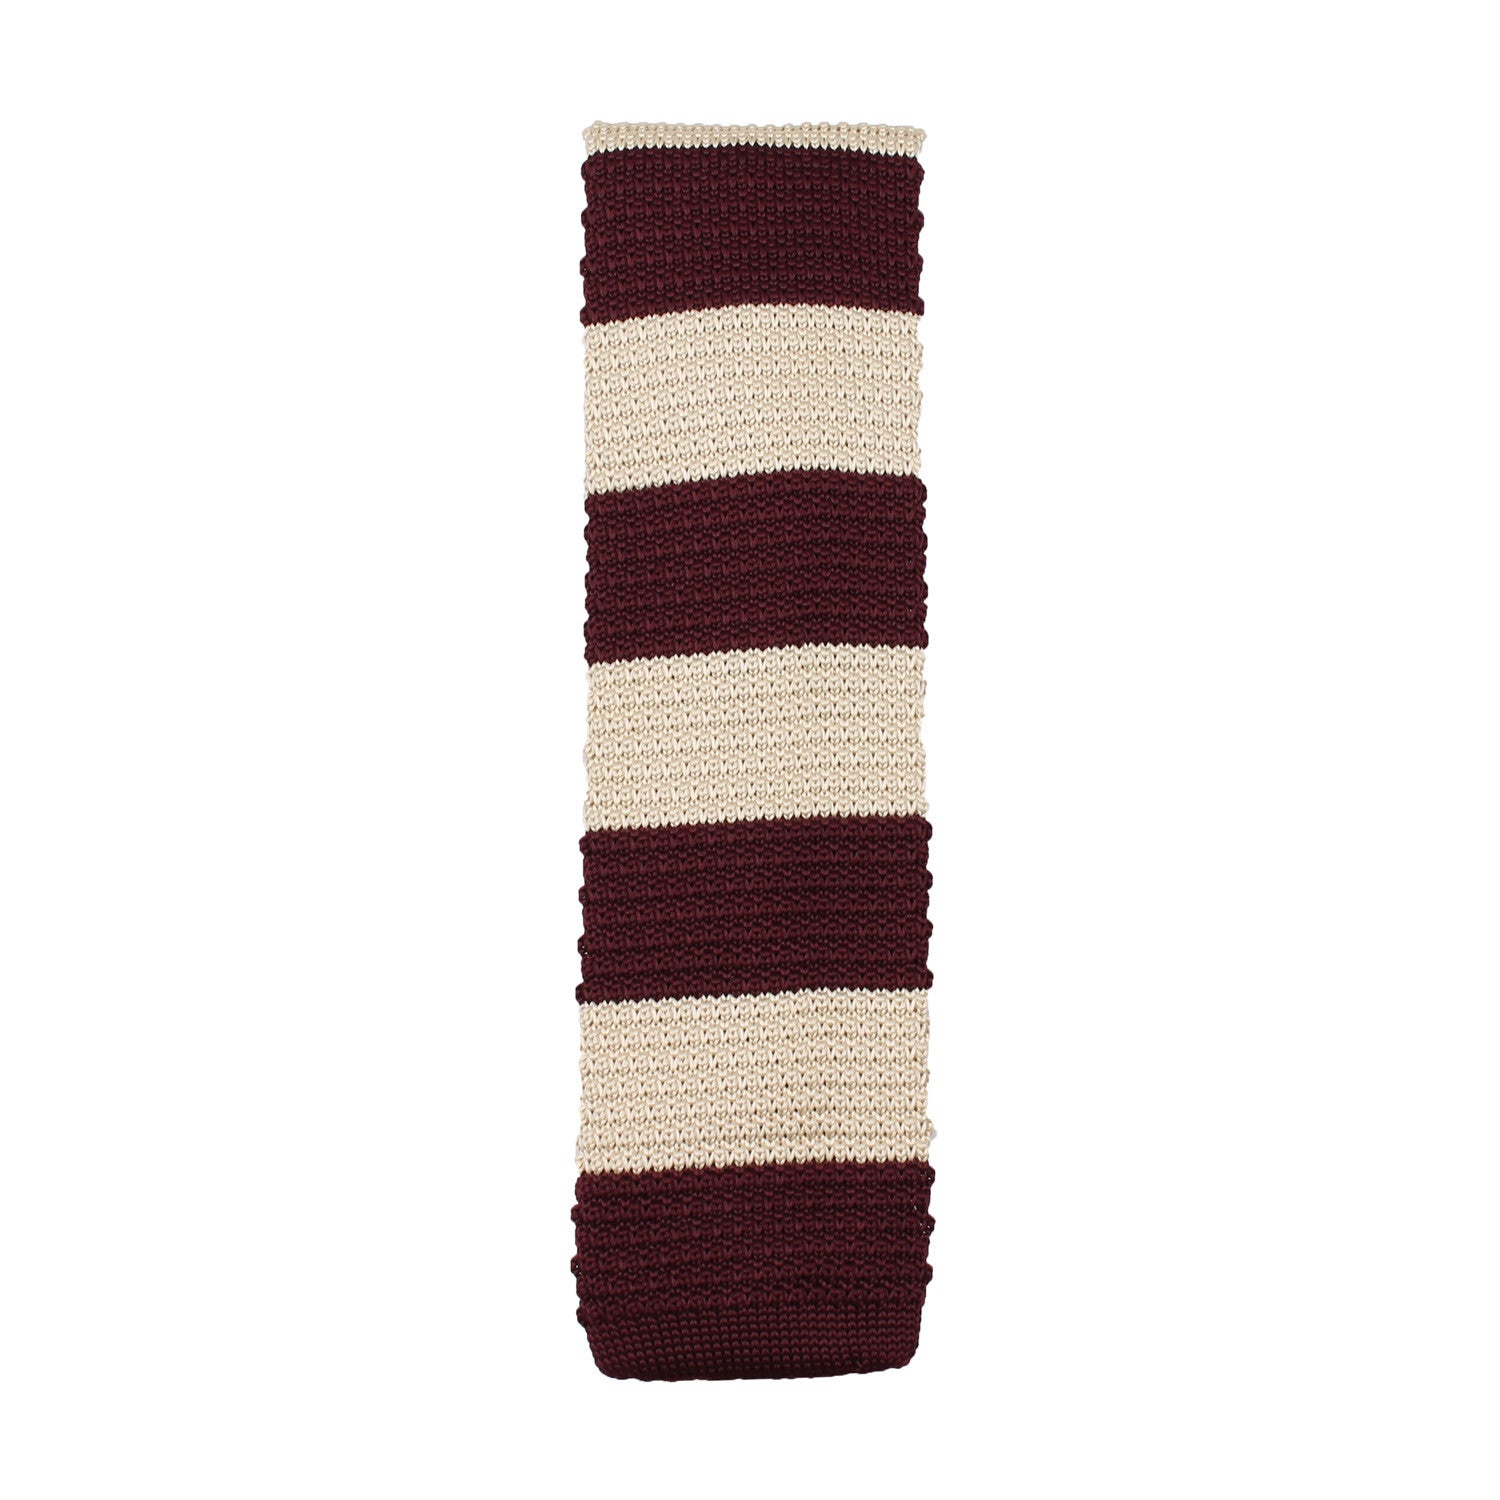 Burgundy Vanilla Knitted Tie | Knit Ties Knits Necktie Neckties | OTAA